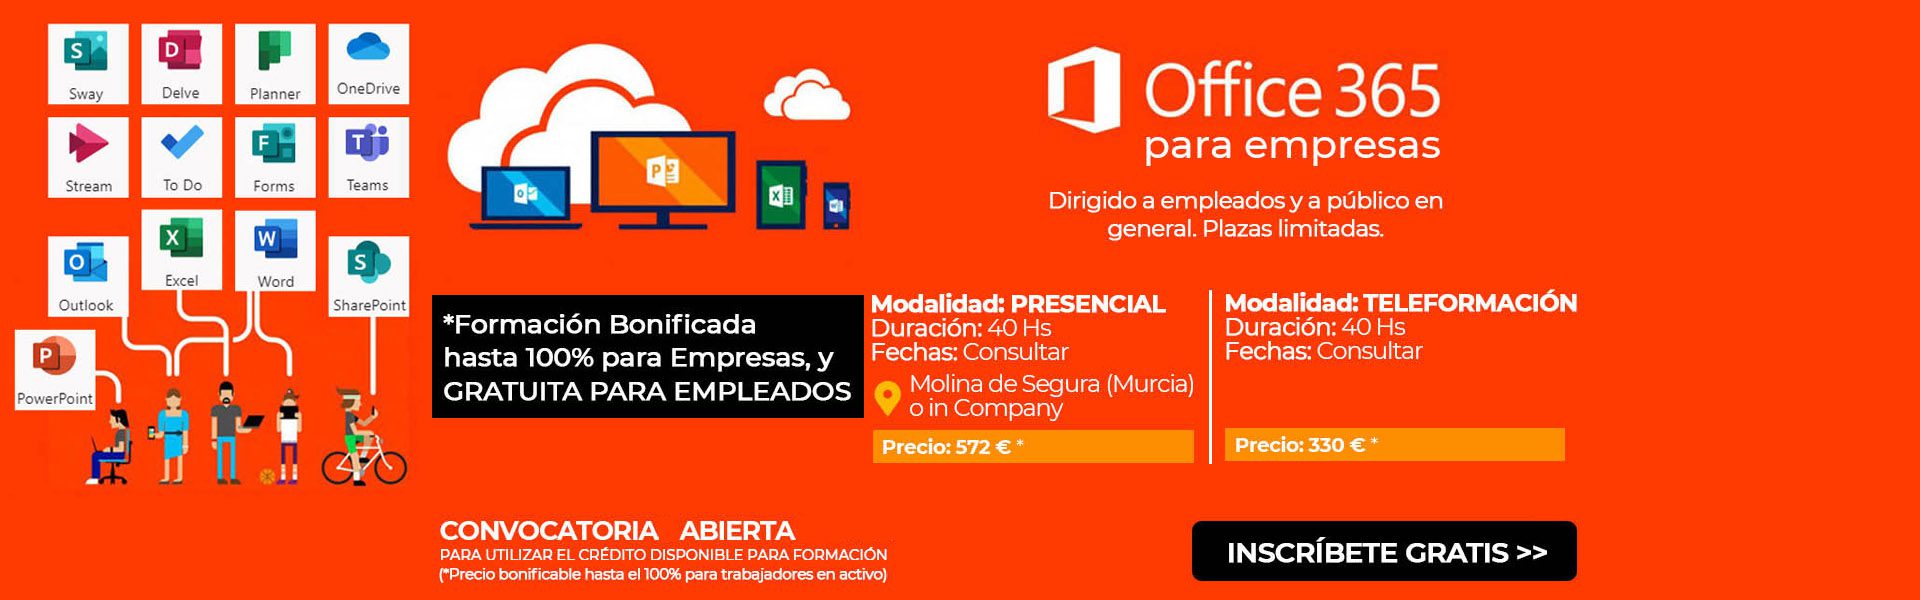 Curso de Microsoft Office 365 para empresas gratuito para empleados